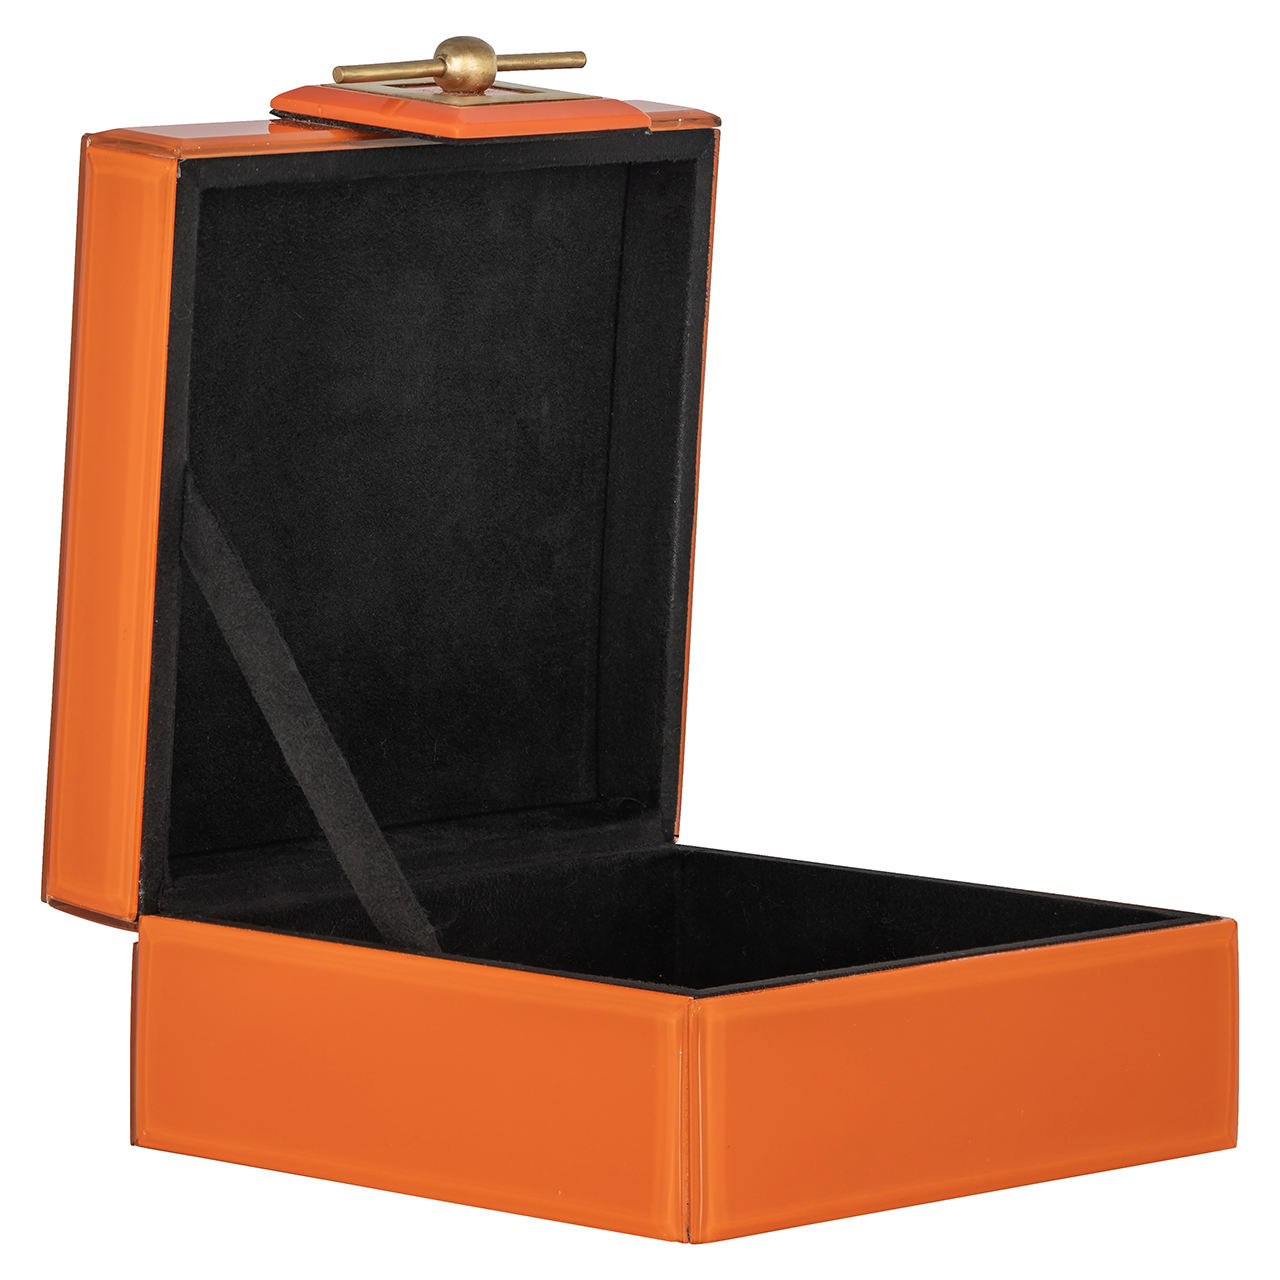 Juwelen box Bodine oranje klein